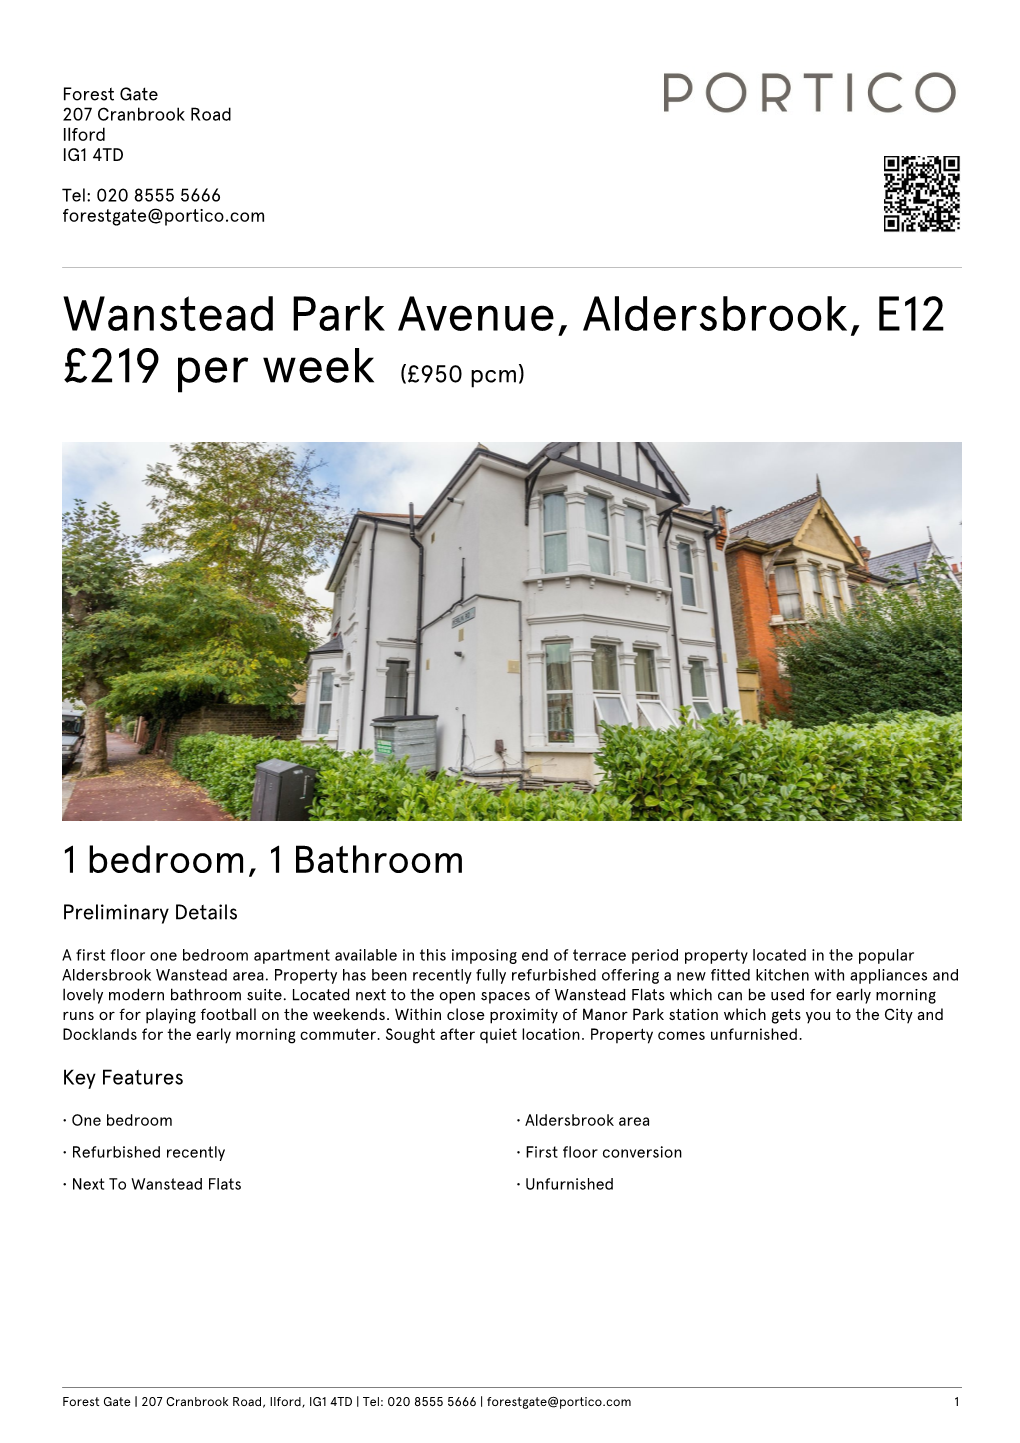 Wanstead Park Avenue, Aldersbrook, E12 £219 Per Week